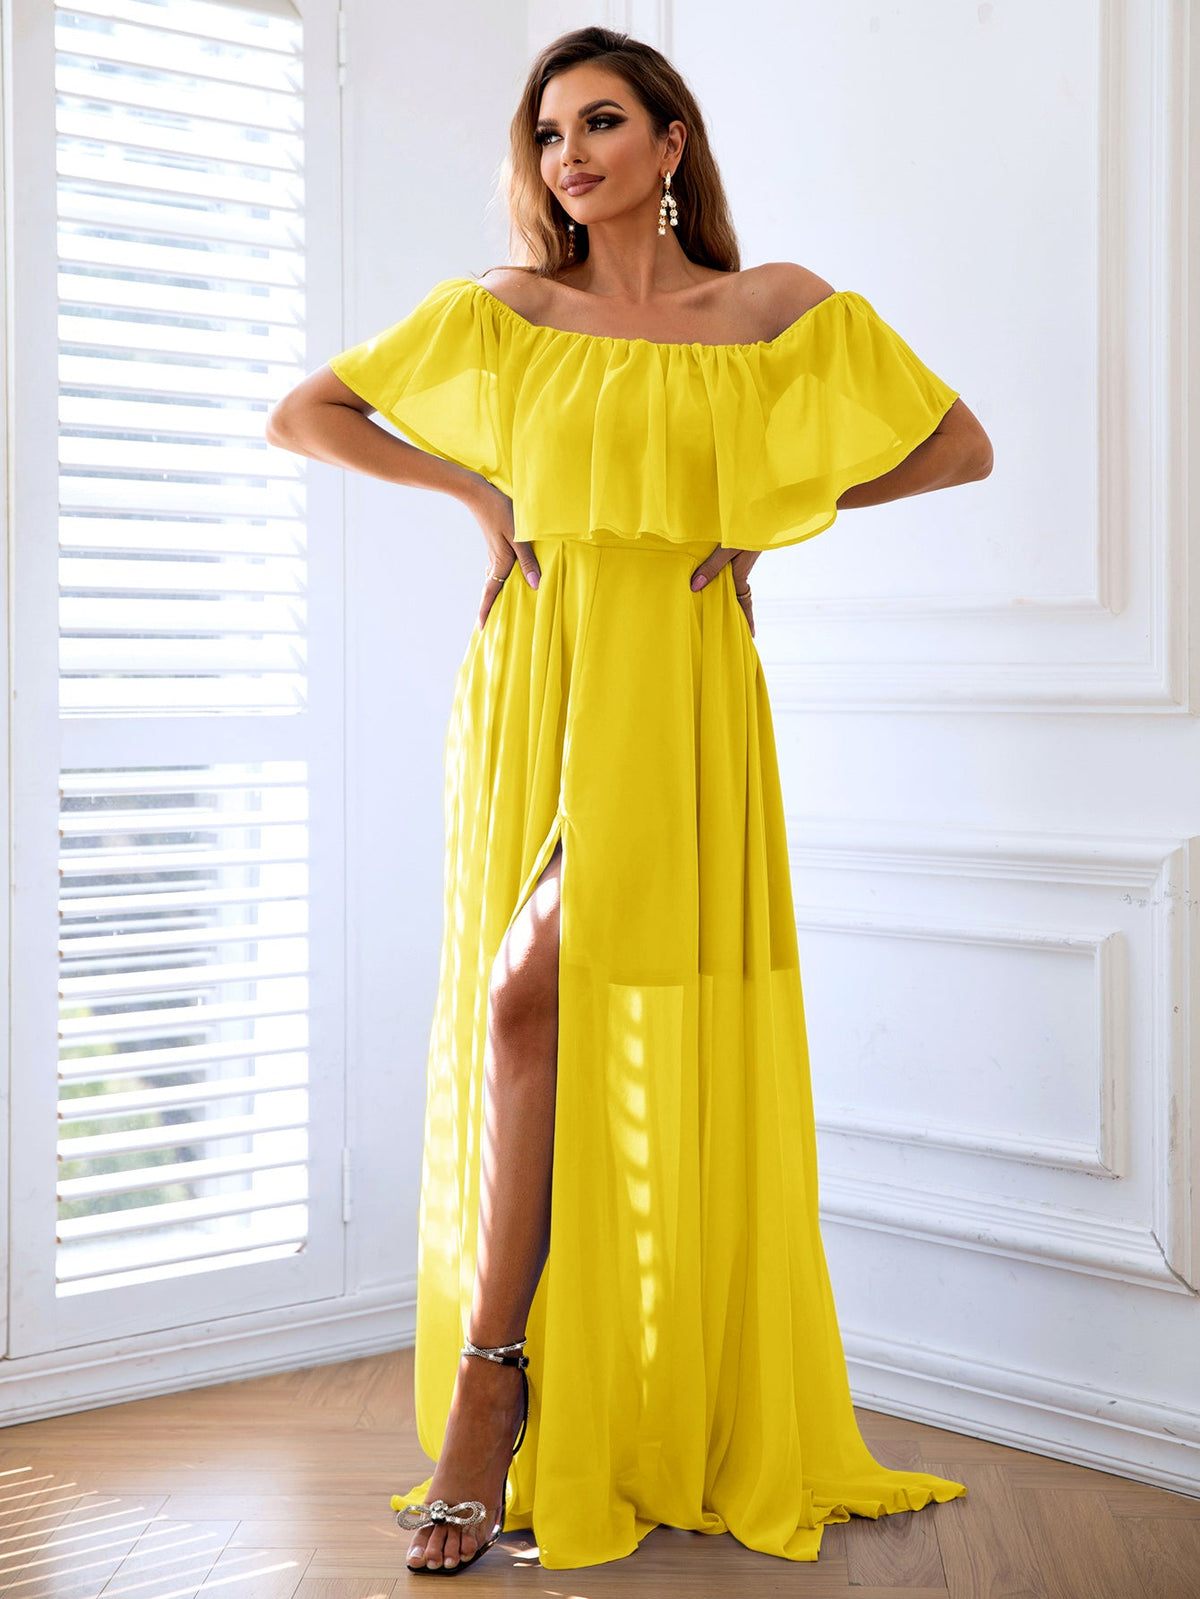 Enchanting Off The Shoulder Maxi Dress - yellow chiffon maxi dress with split leg. #Firefly Lane Boutique1